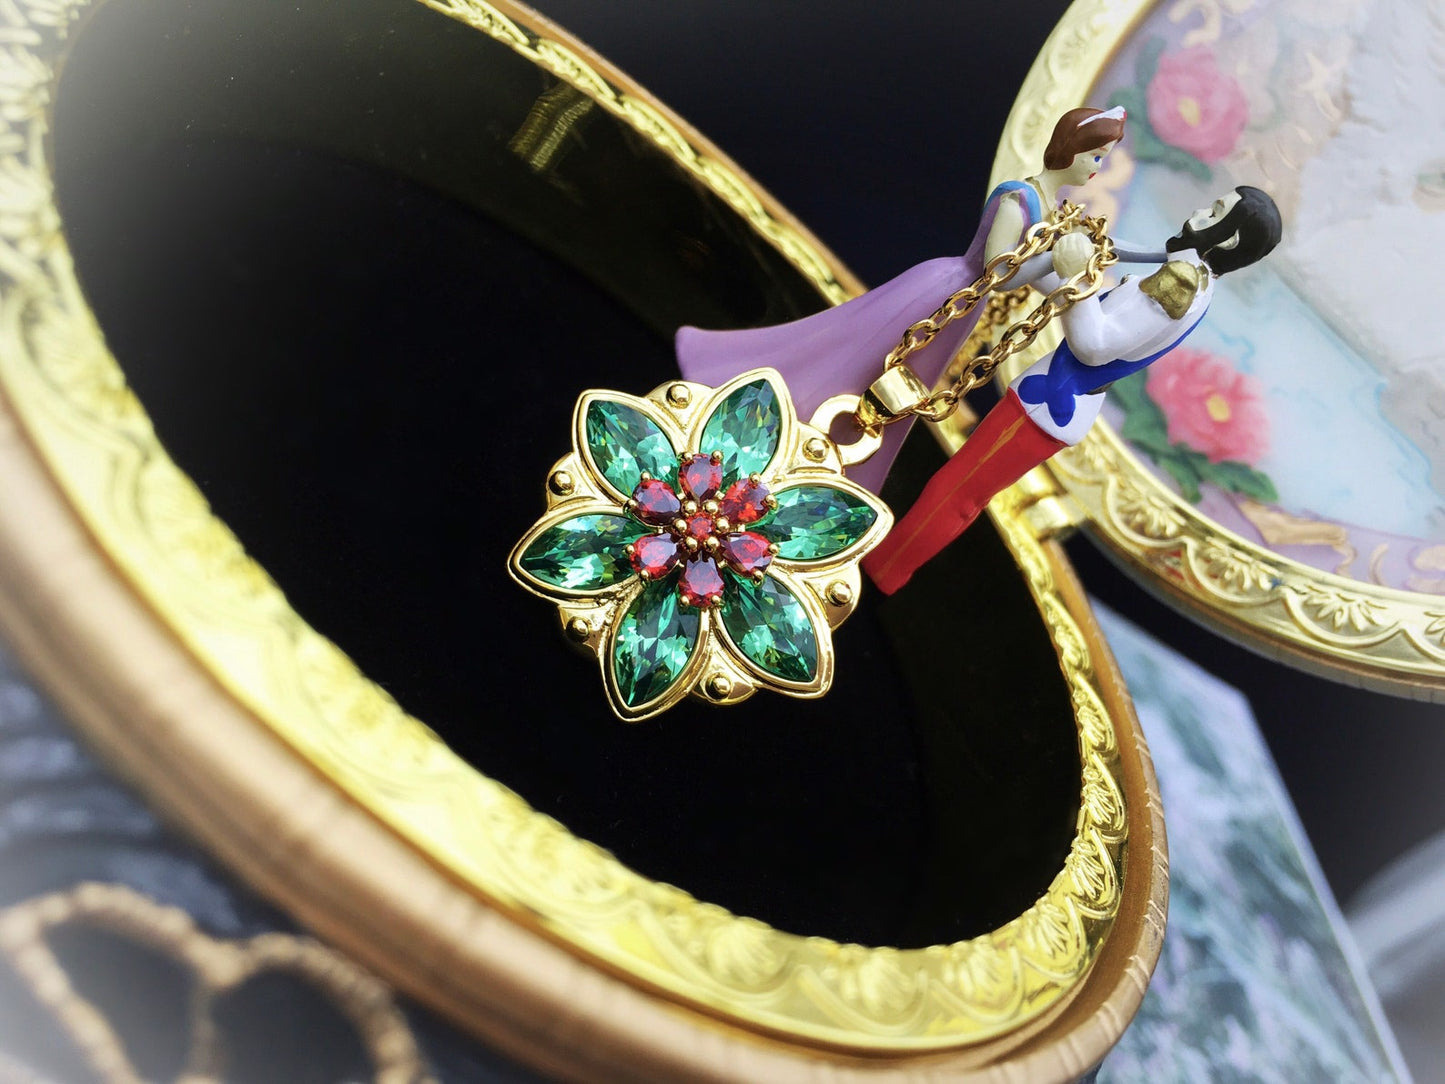 Anastasia Necklace "Together in Paris" - Together in Paris - Vintage Green Erinite Crystals